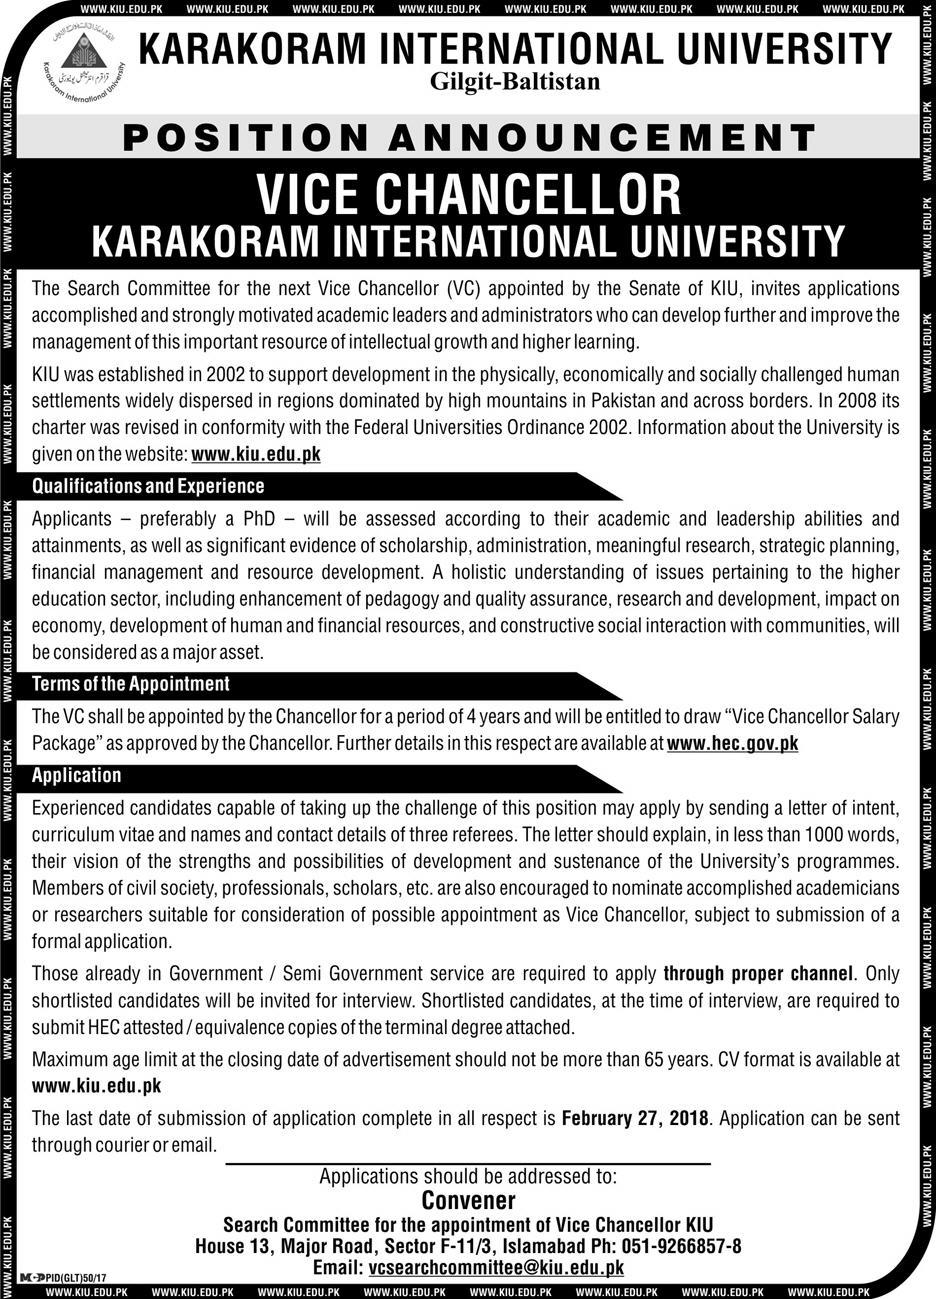 Jobs in Karakoram International University 28 Jan 2018